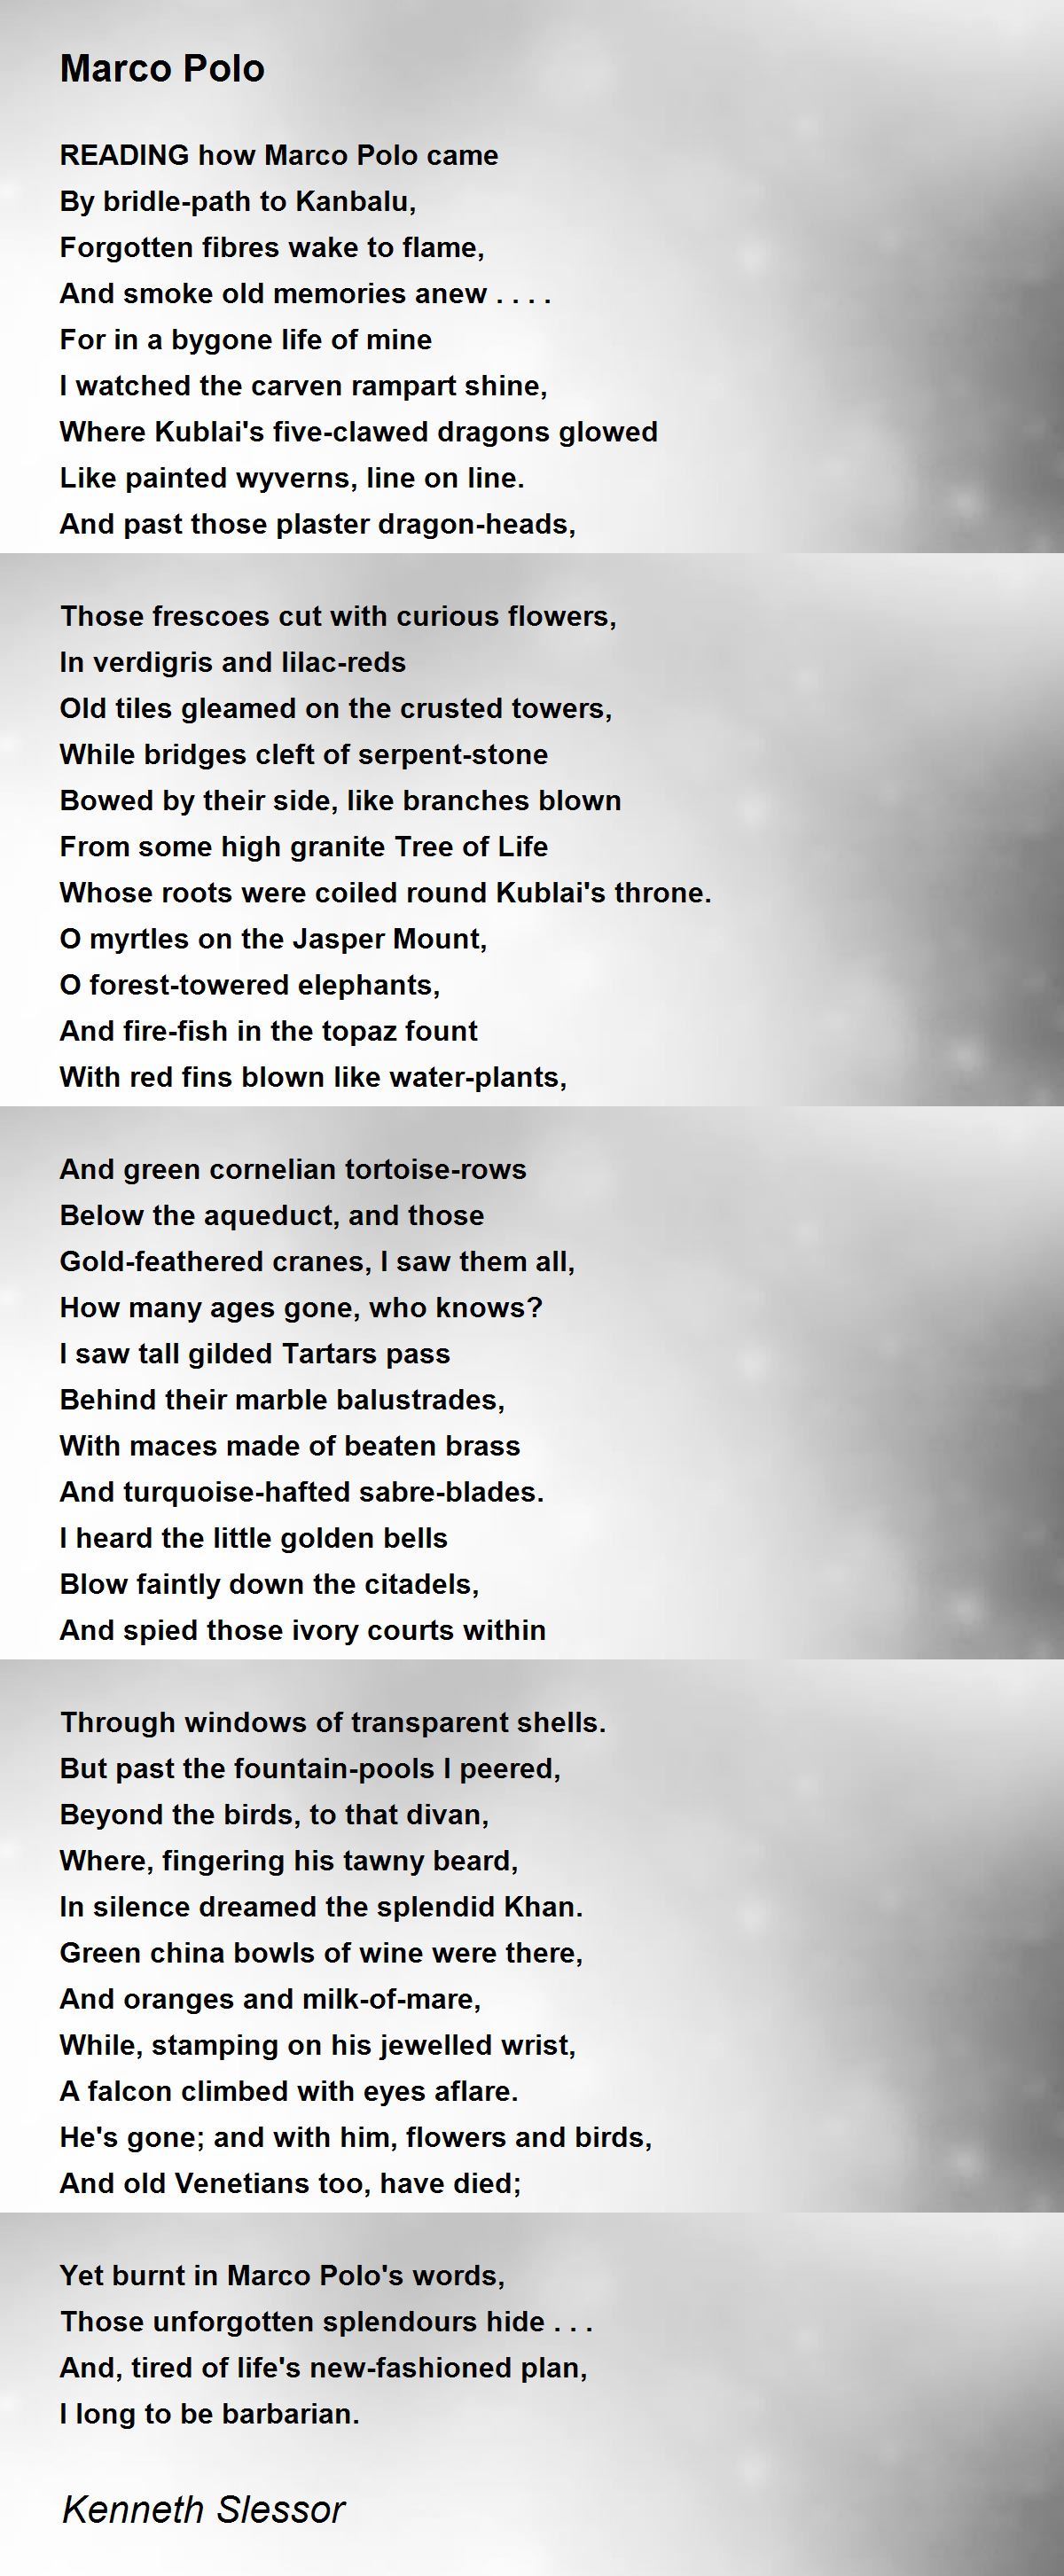 five bells poem